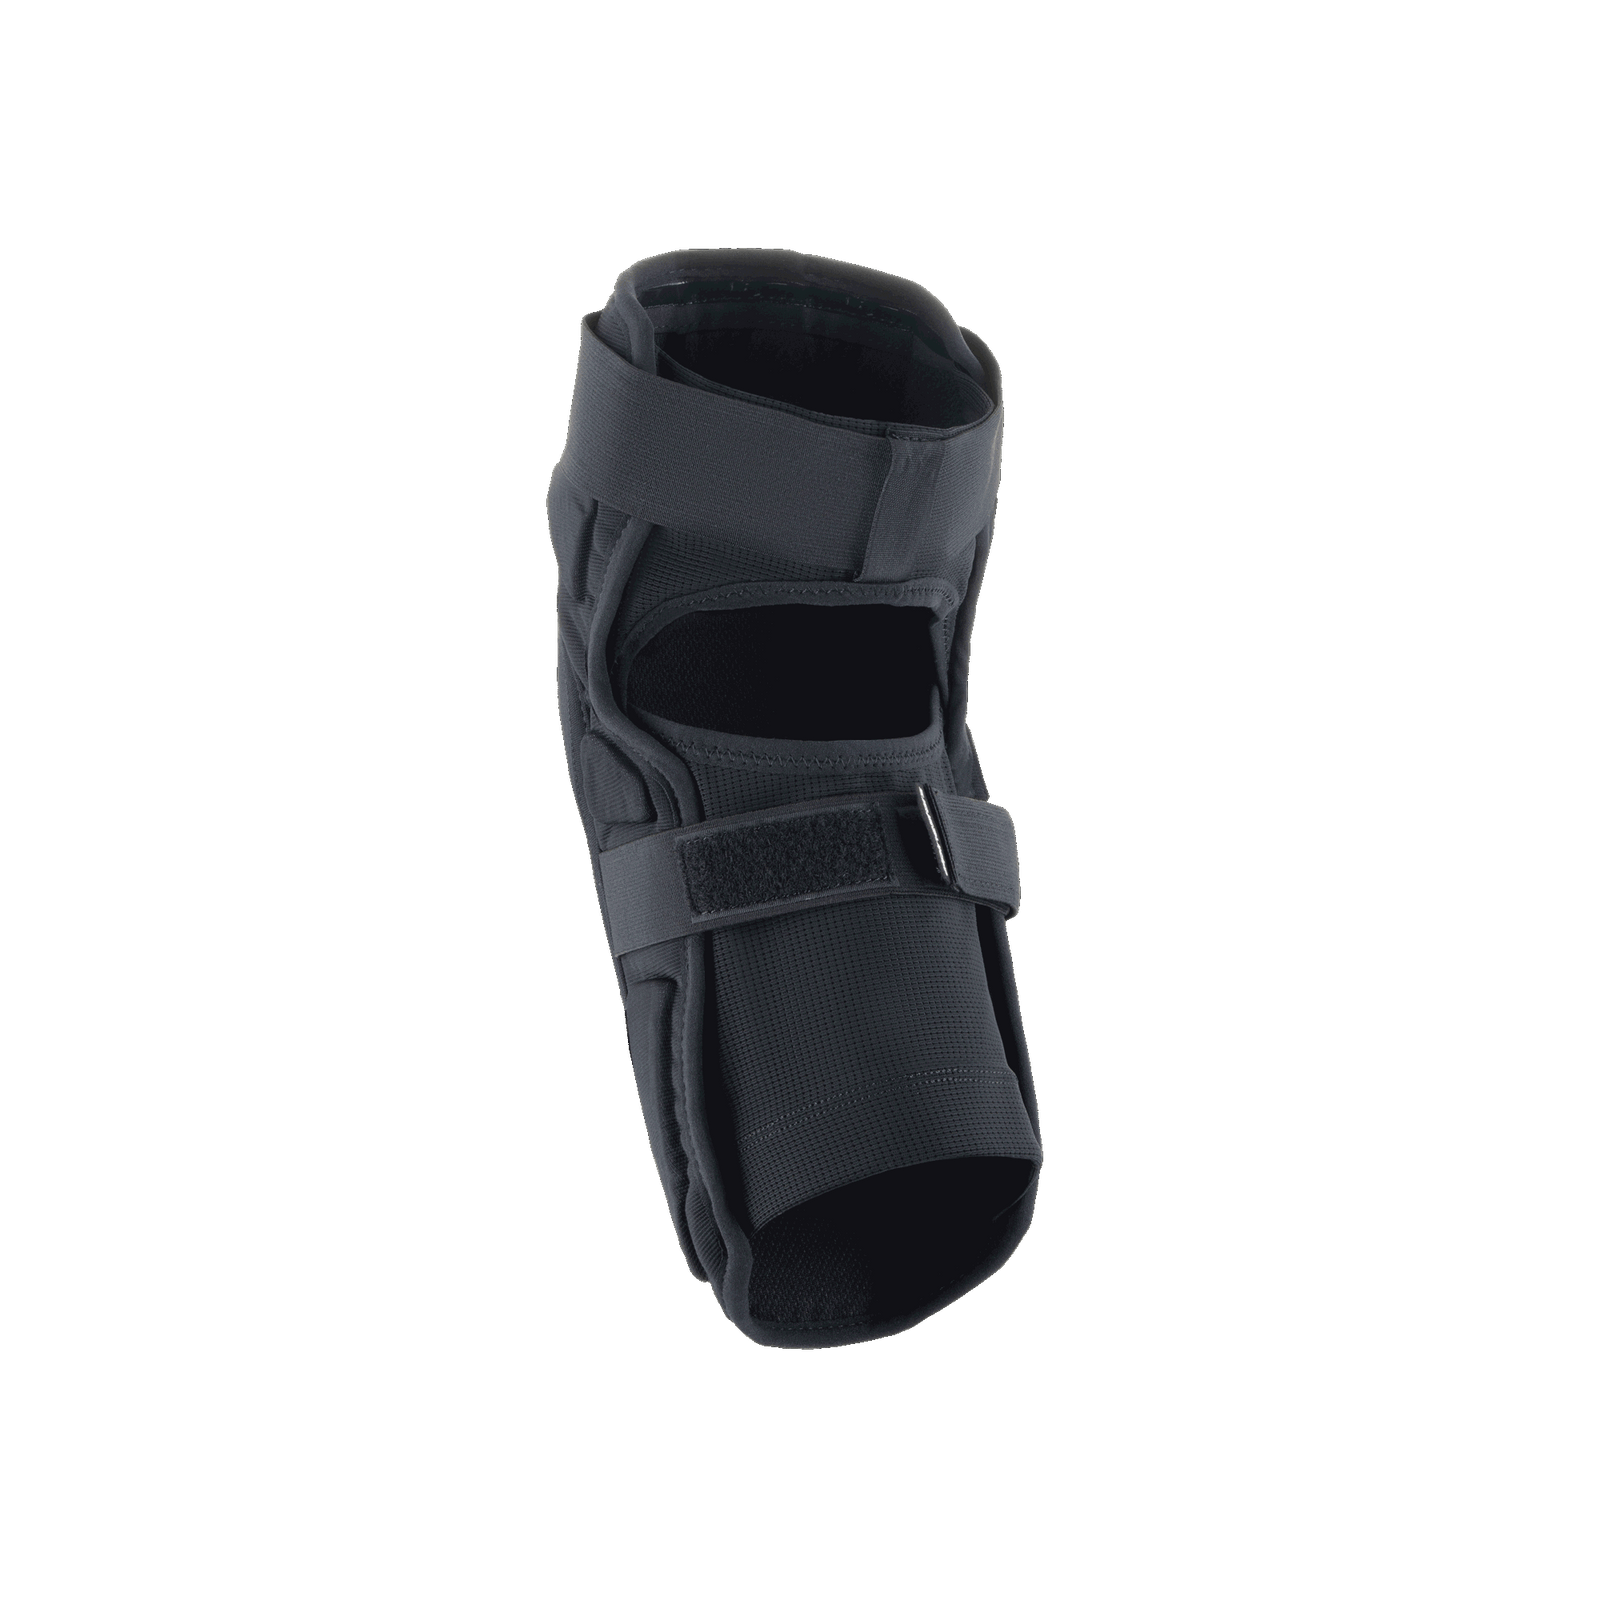 A-Impact Plasma Pro Knee Protector